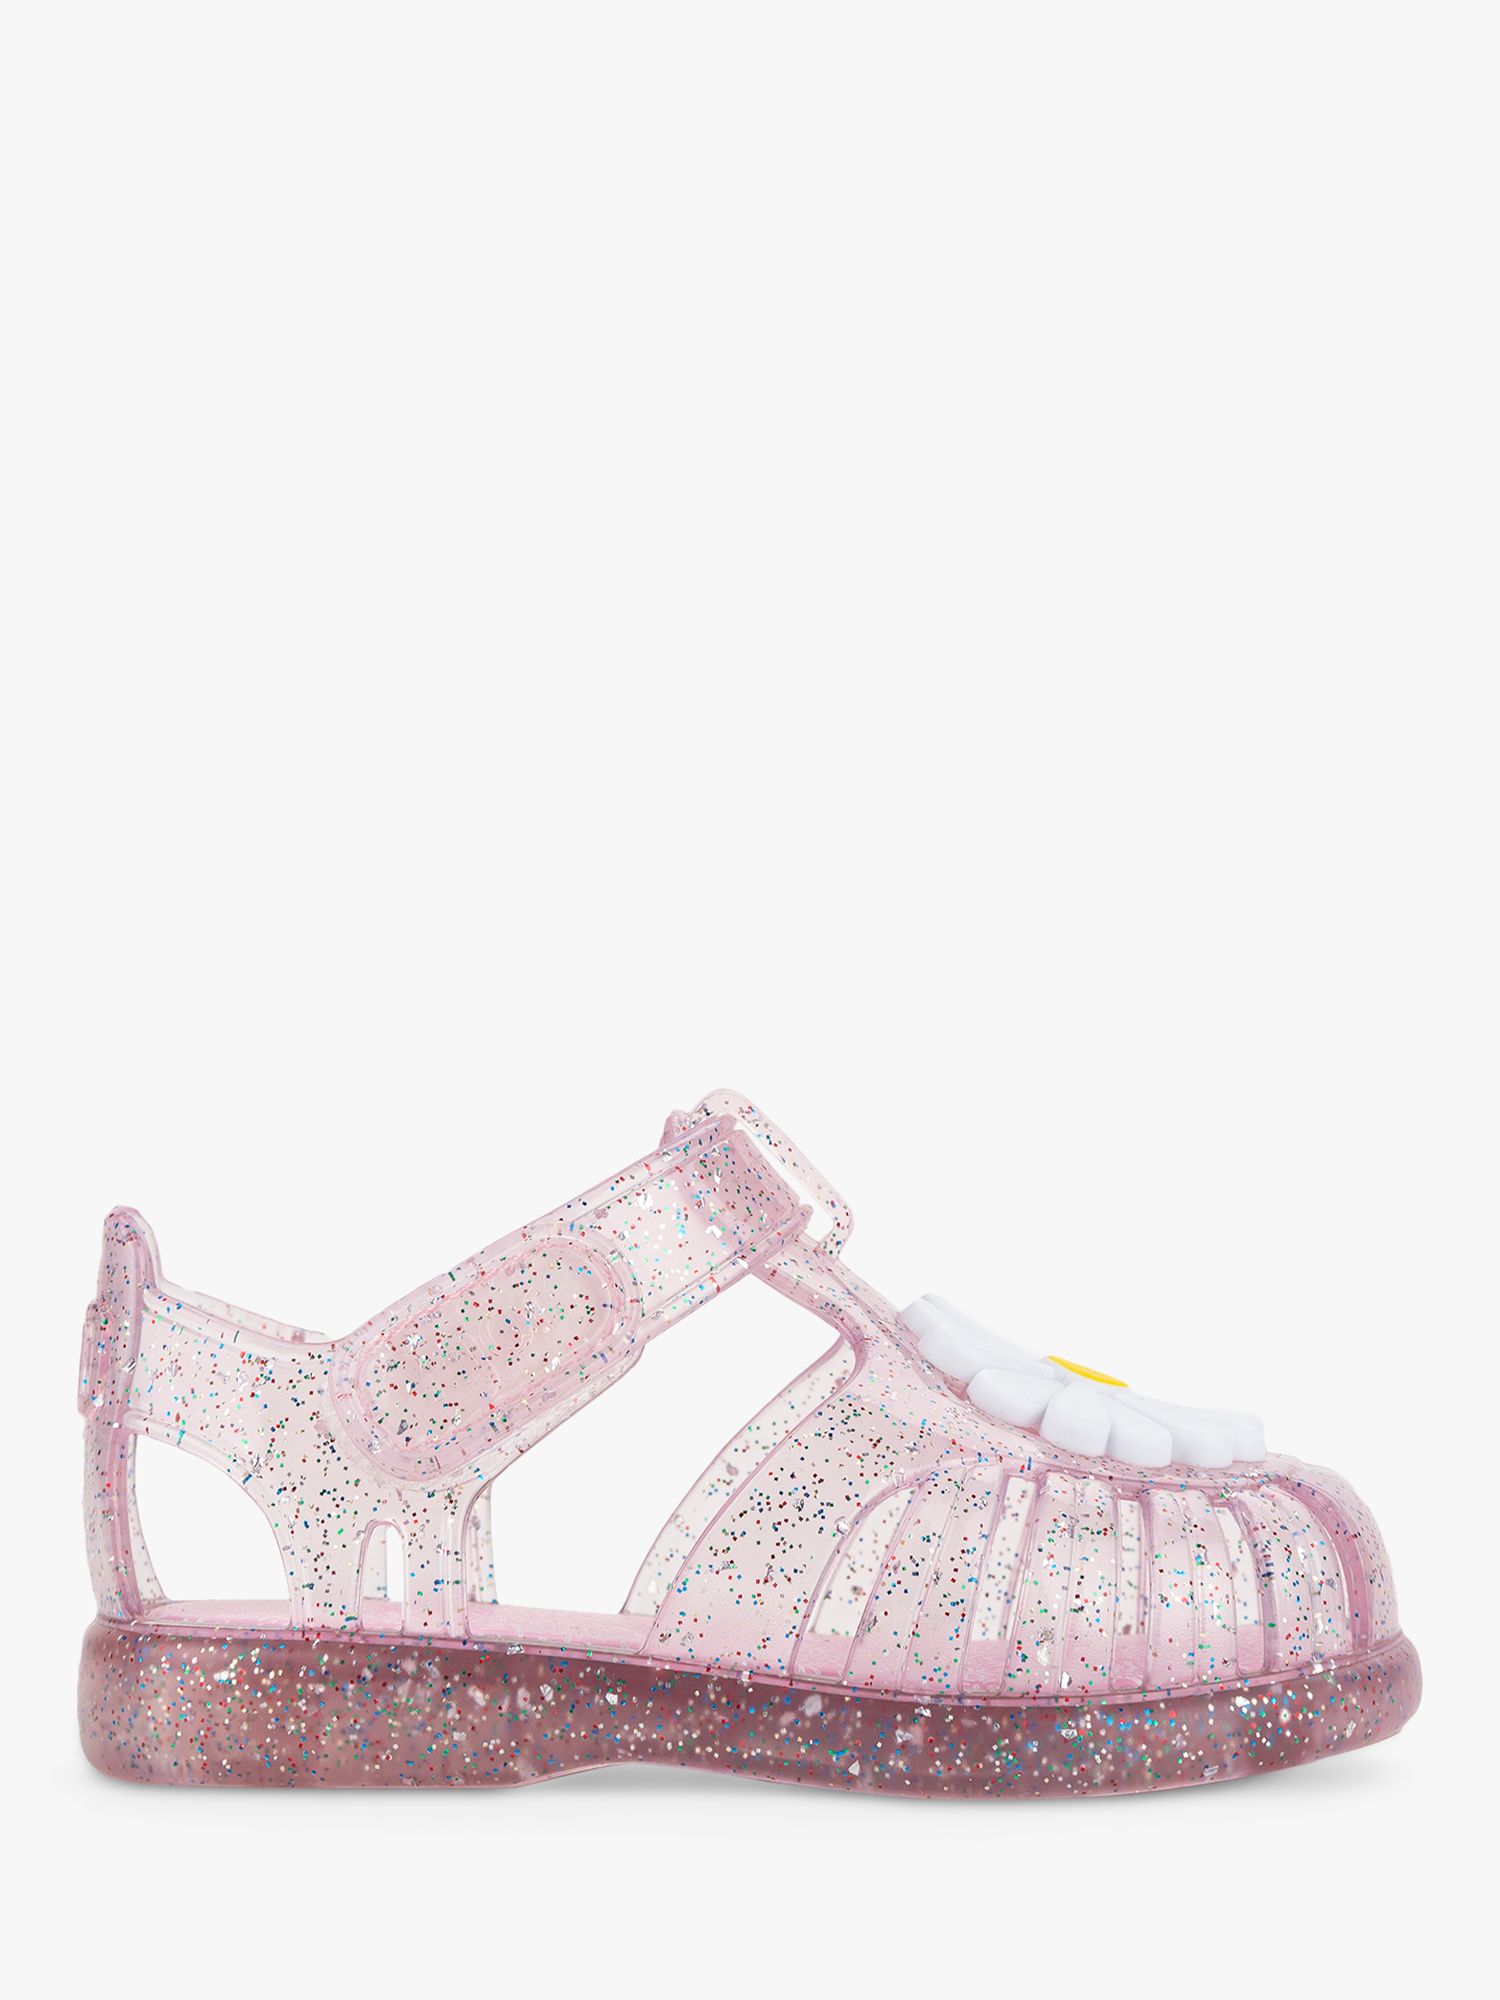 IGOR Kids' Tobby Gloss Glitter Floral Jelly Sandals, Pink, 20